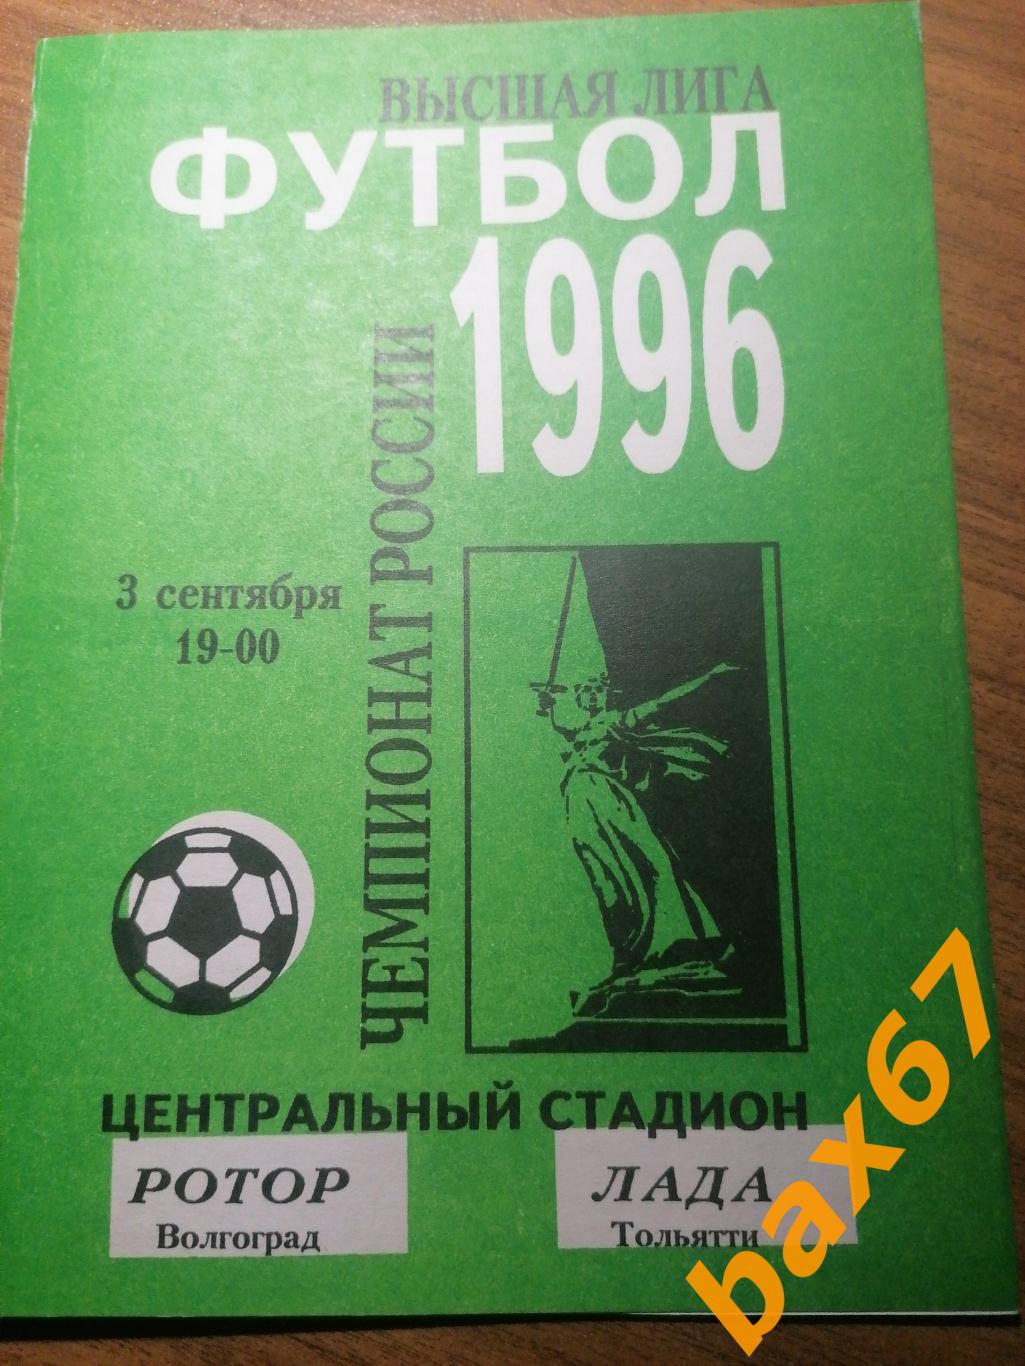 Ротор Волгоград - Лада Тольятти 03.09.1996